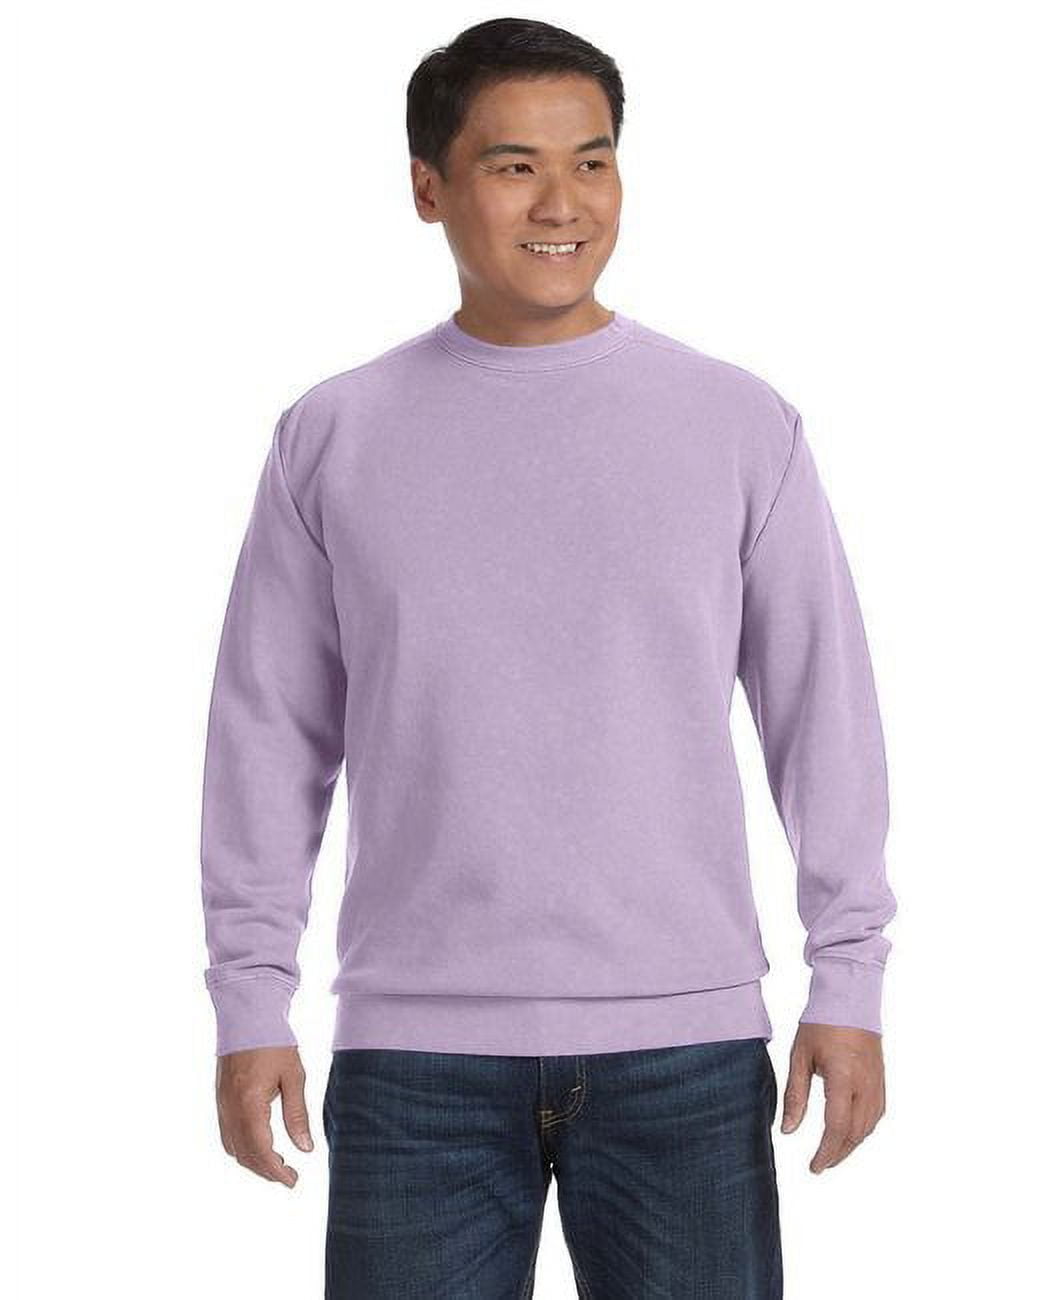 The Comfort Colors Adult Crewneck Sweatshirt - ORCHID - S 